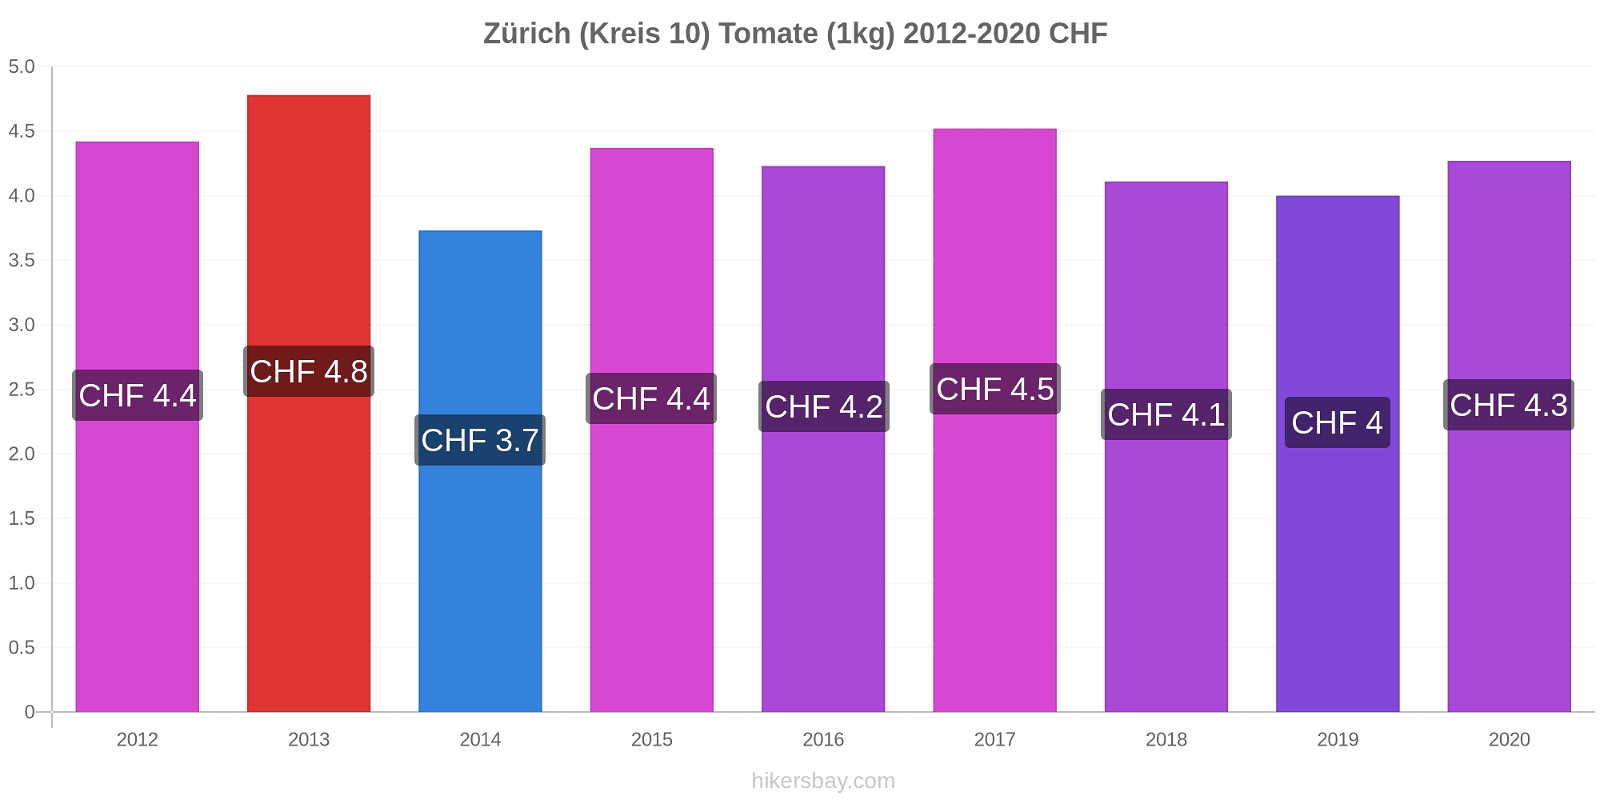 Zürich (Kreis 10) variação de preço Tomate (1kg) hikersbay.com